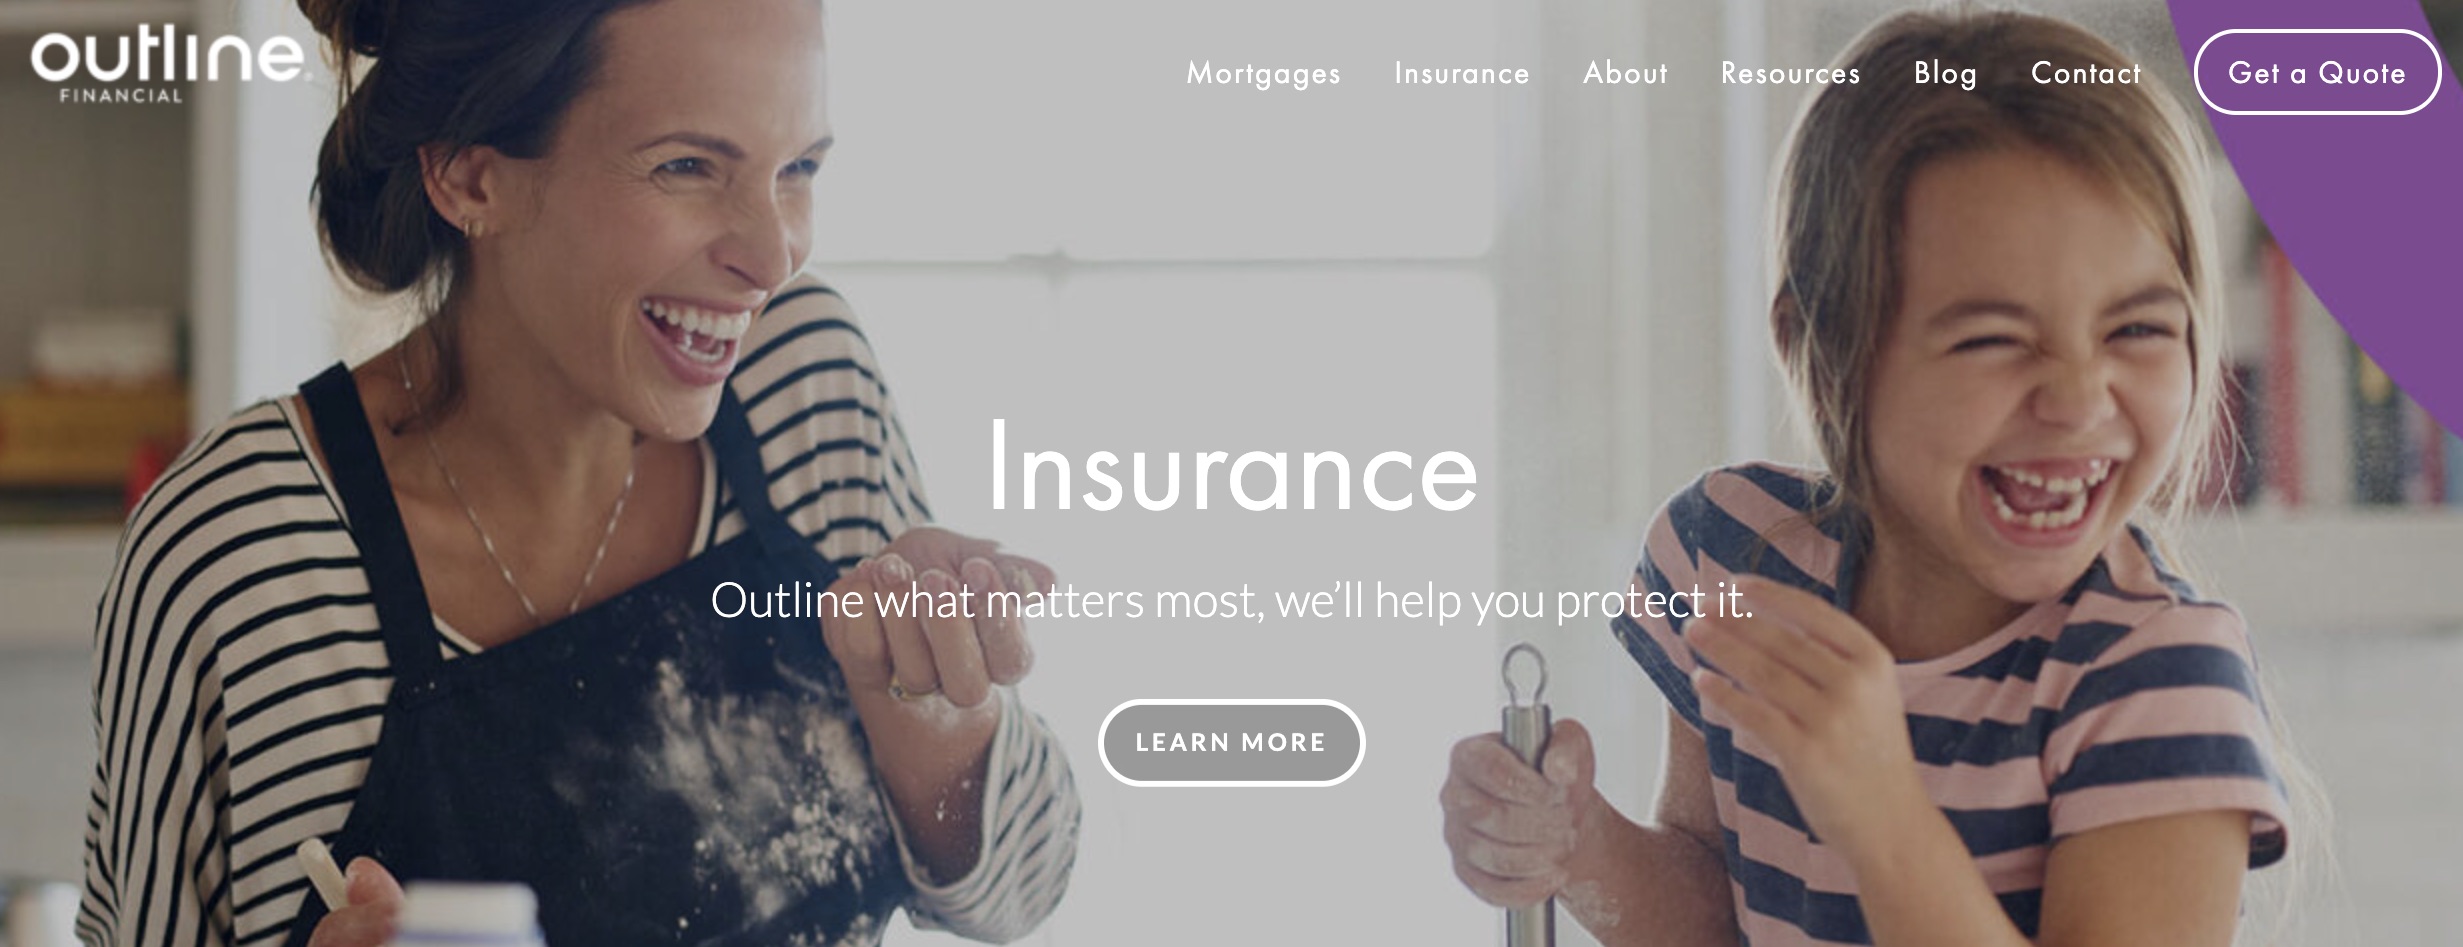 Outline Financial - Mortgage & Insurance Broker